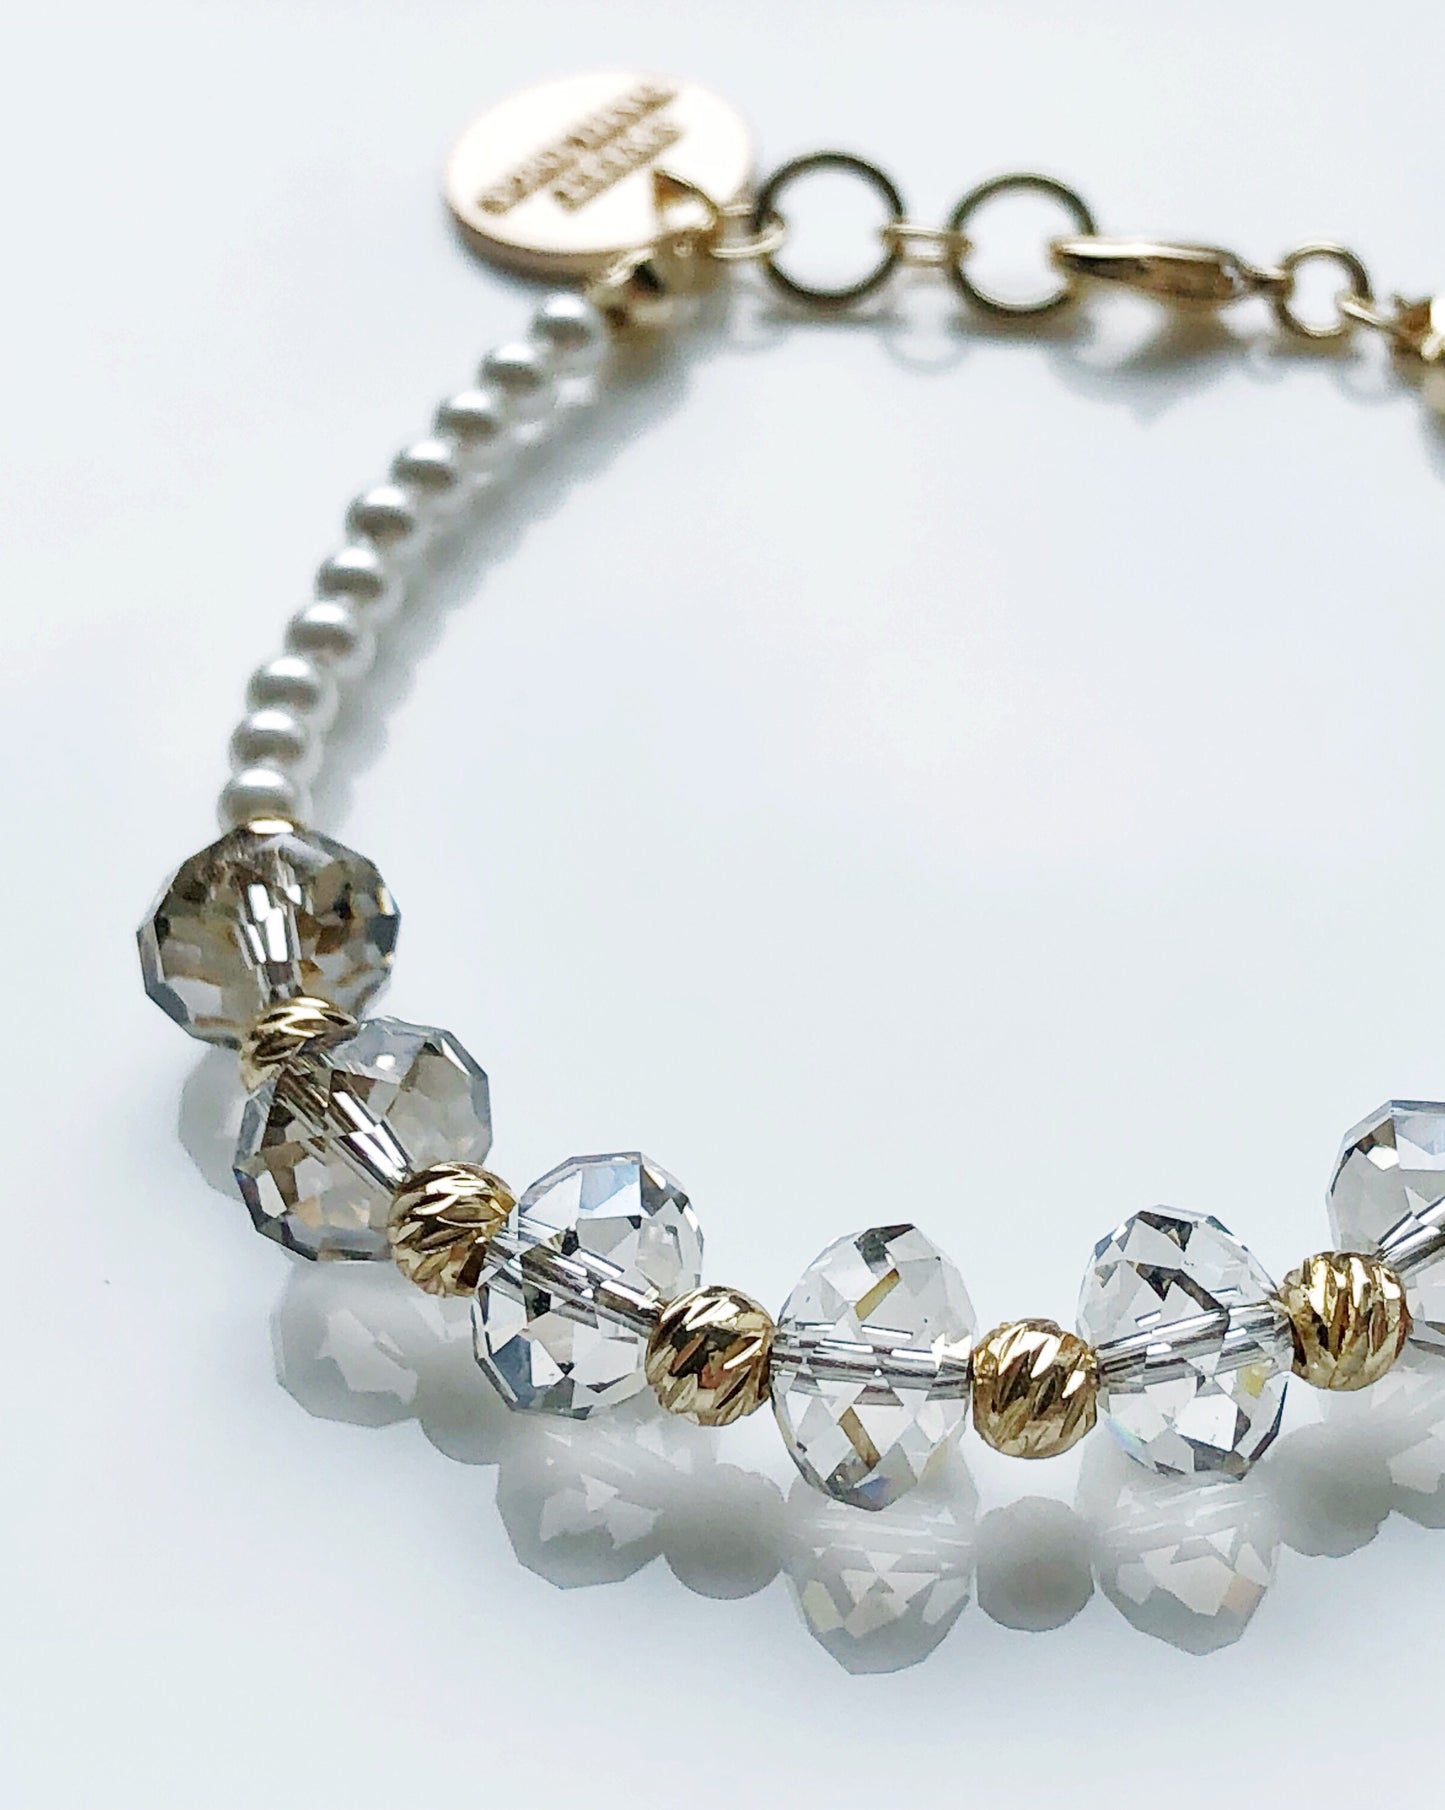 Swarovski crystal pearls and crystals bracelet